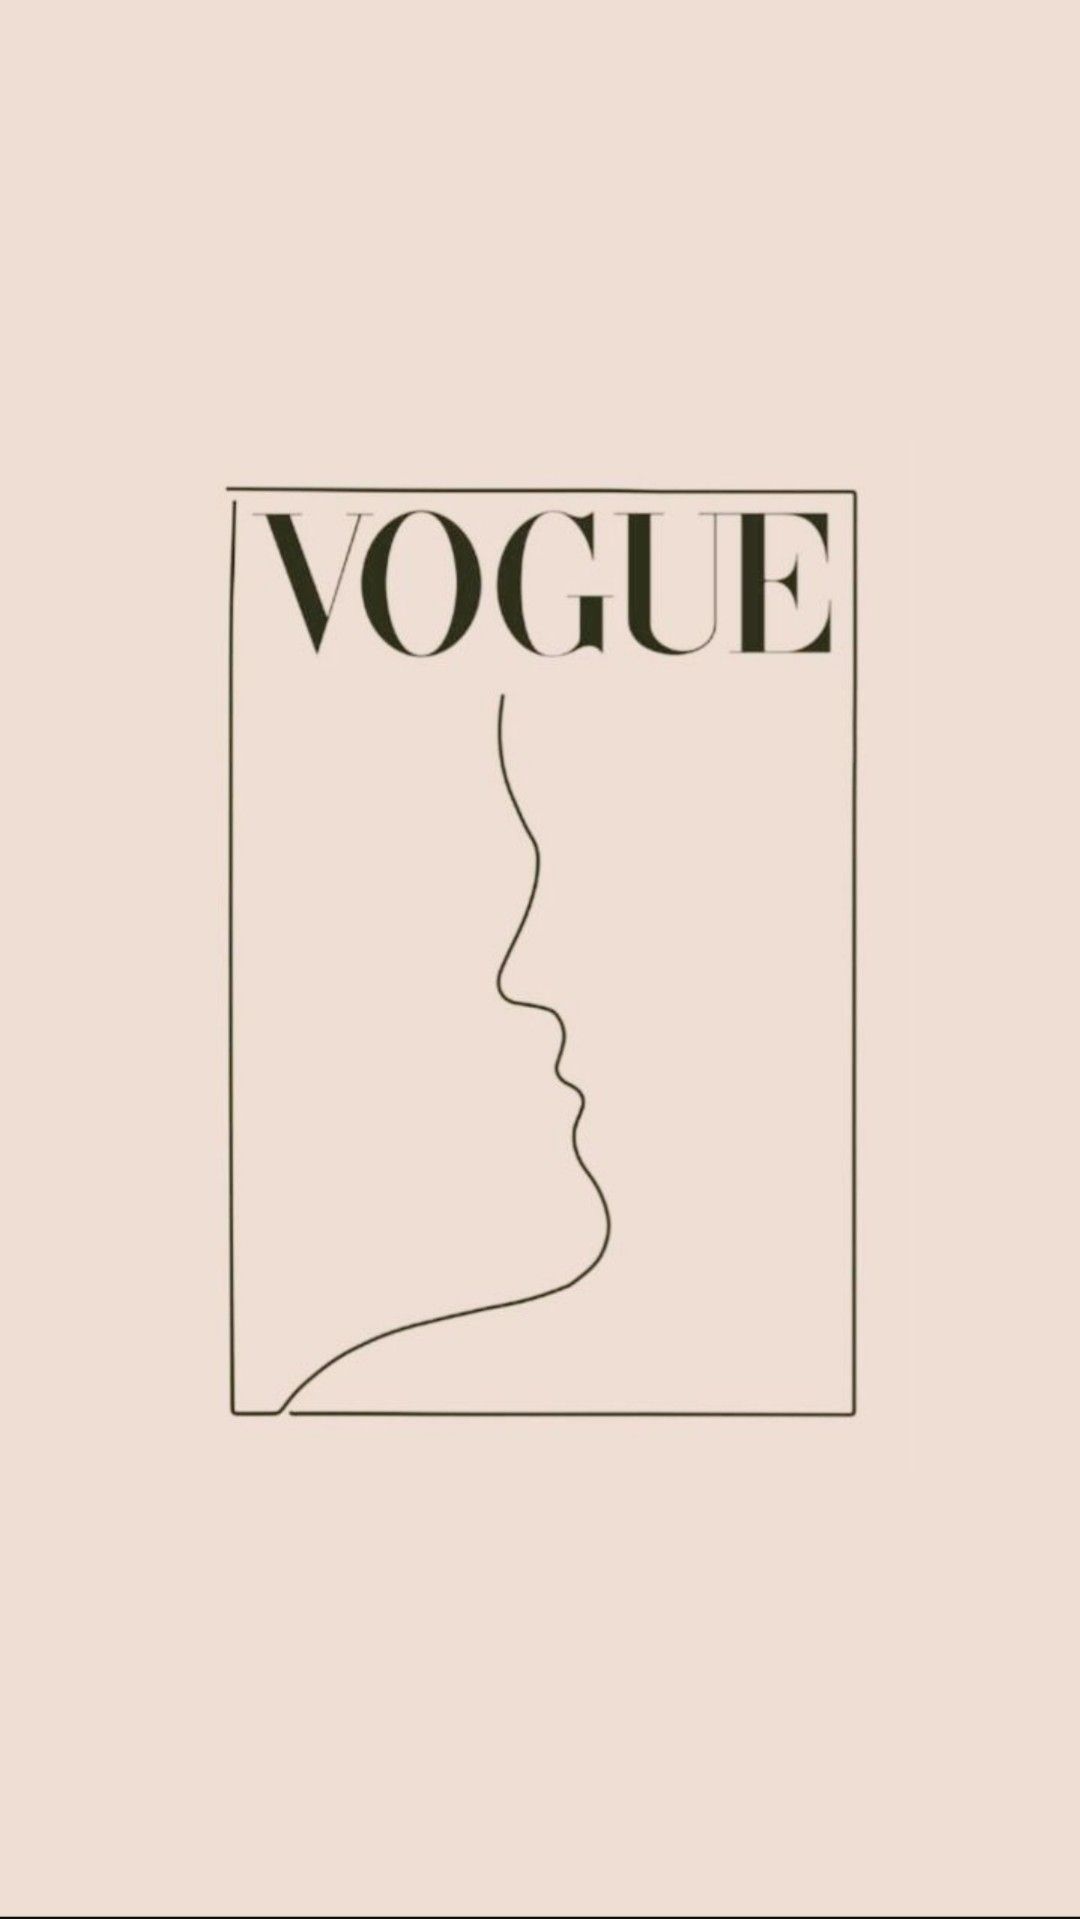 Wallpaper aesthetic ; minimalist ; Vogue. Vogue wallpaper, Minimalist desktop wallpaper, Music poster design